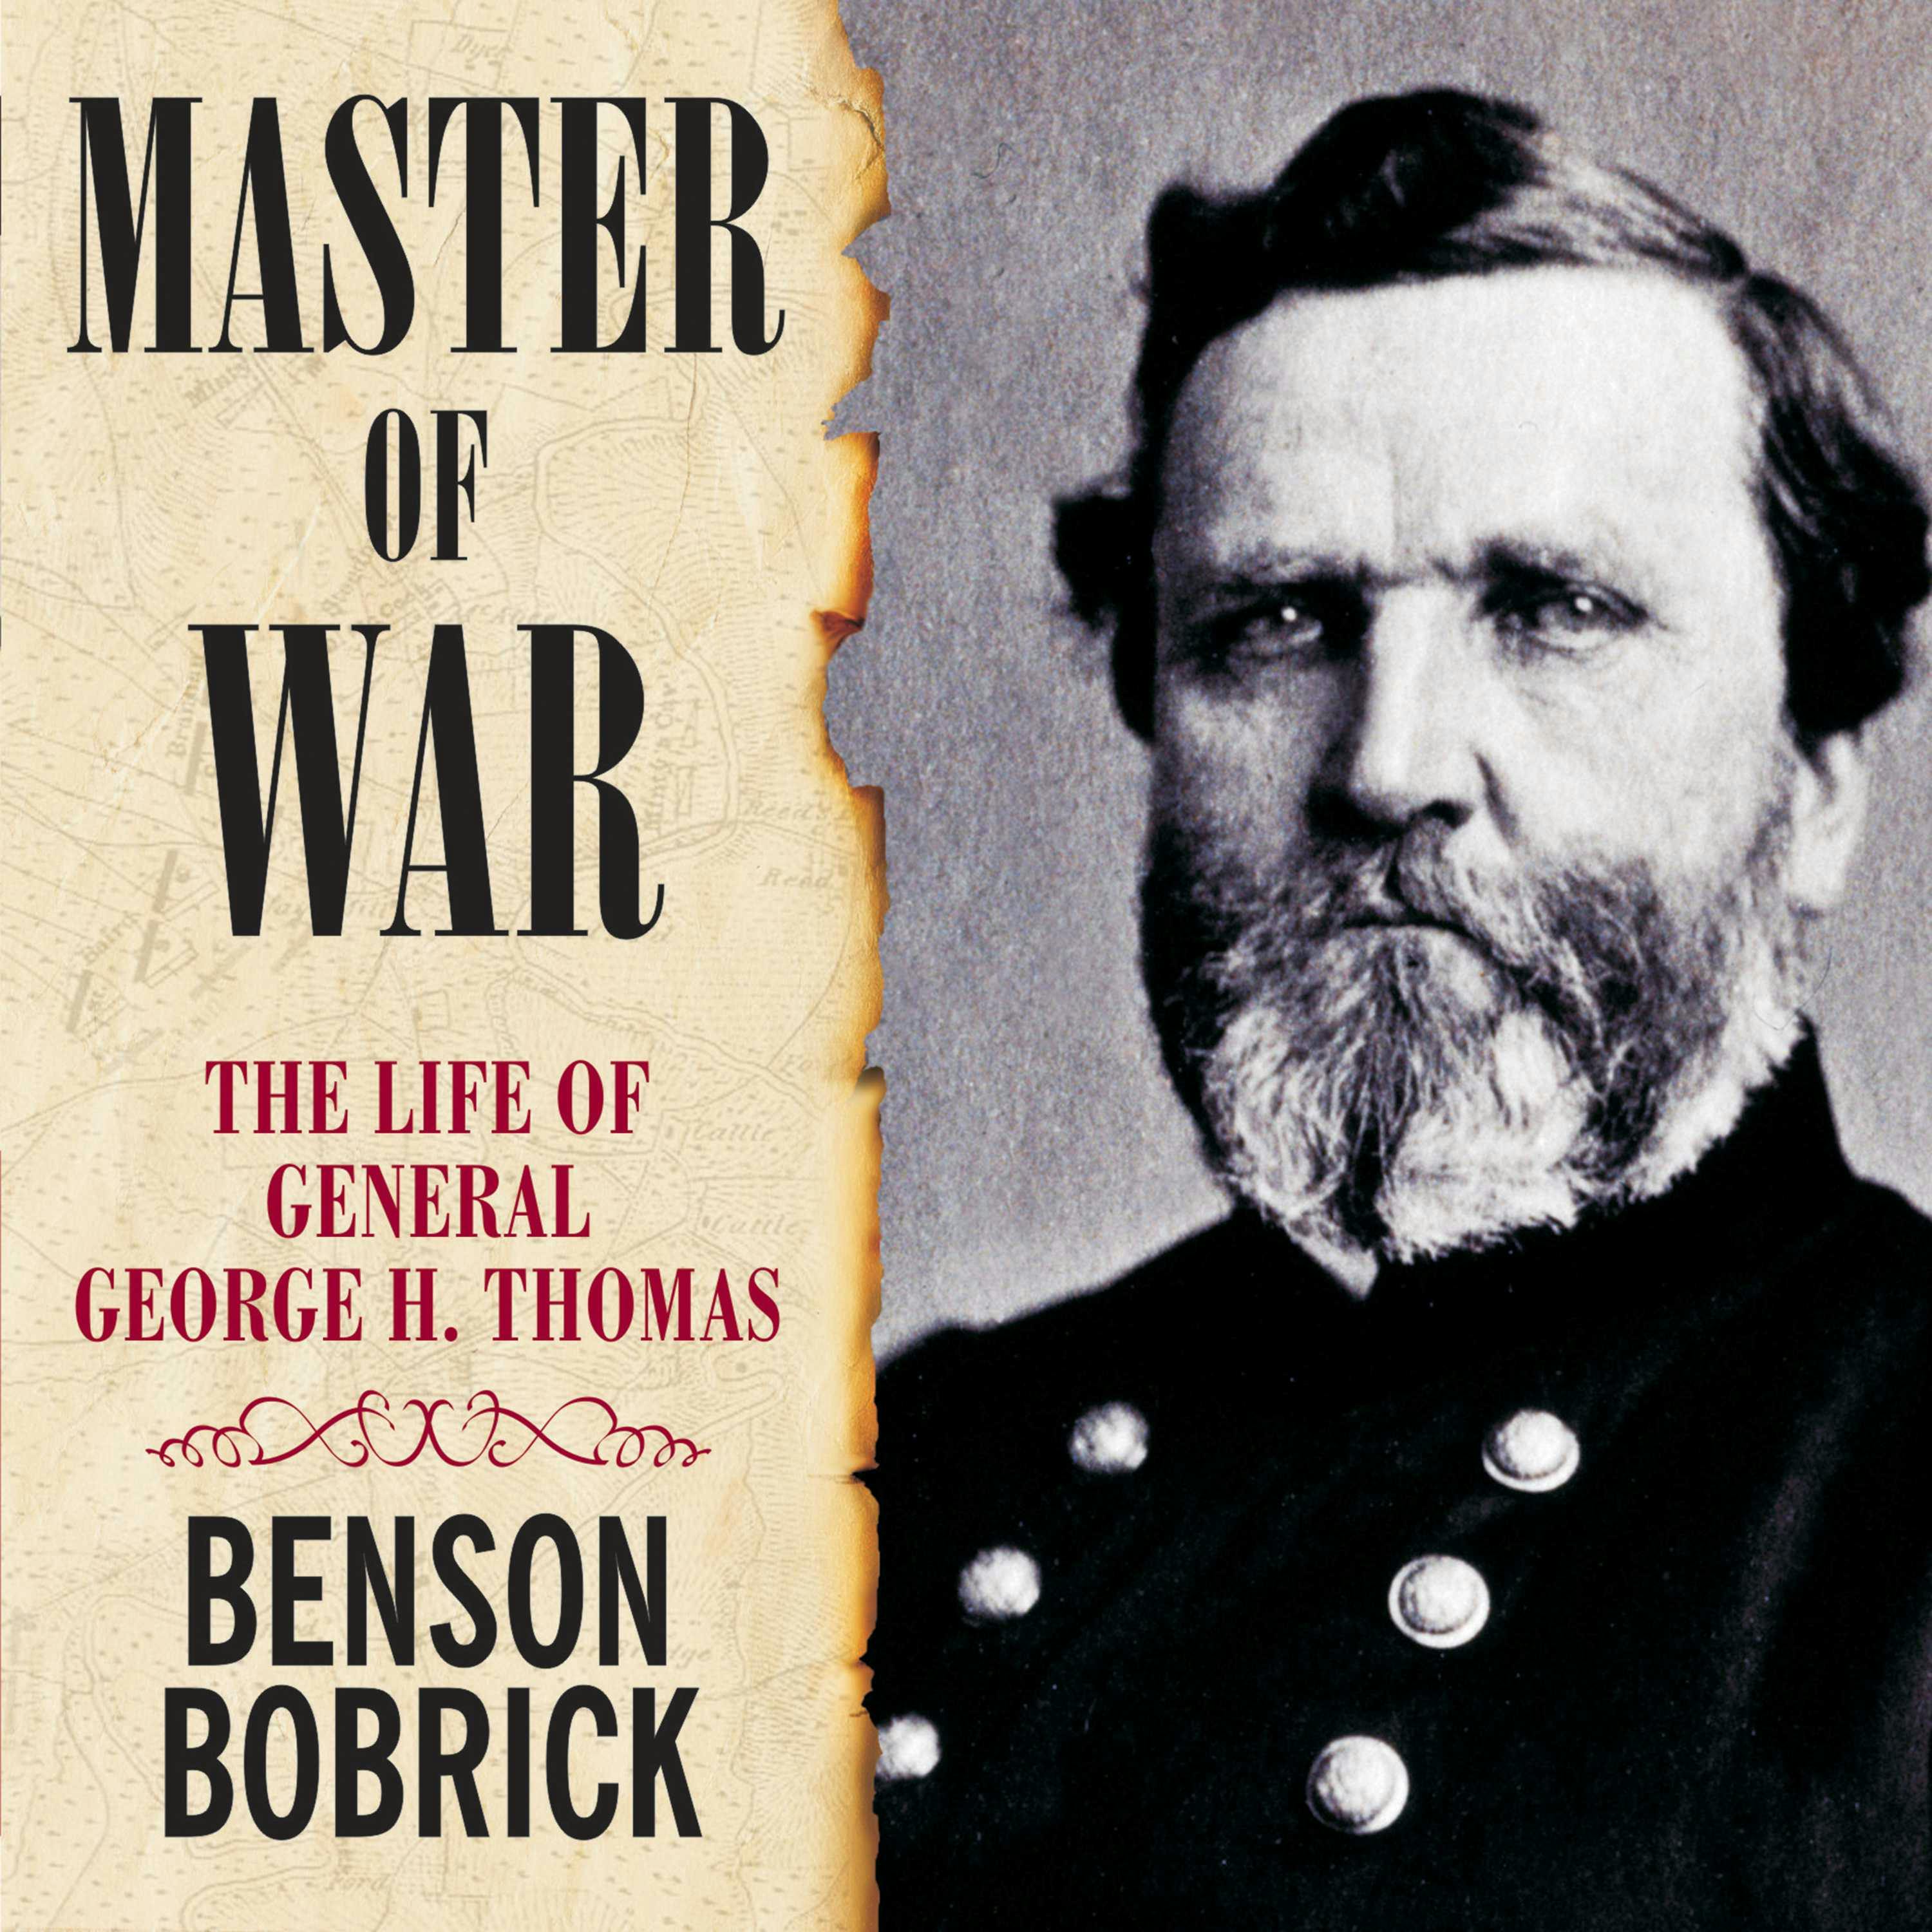 Master of War: The Life of General George H. Thomas - Benson Bobrick